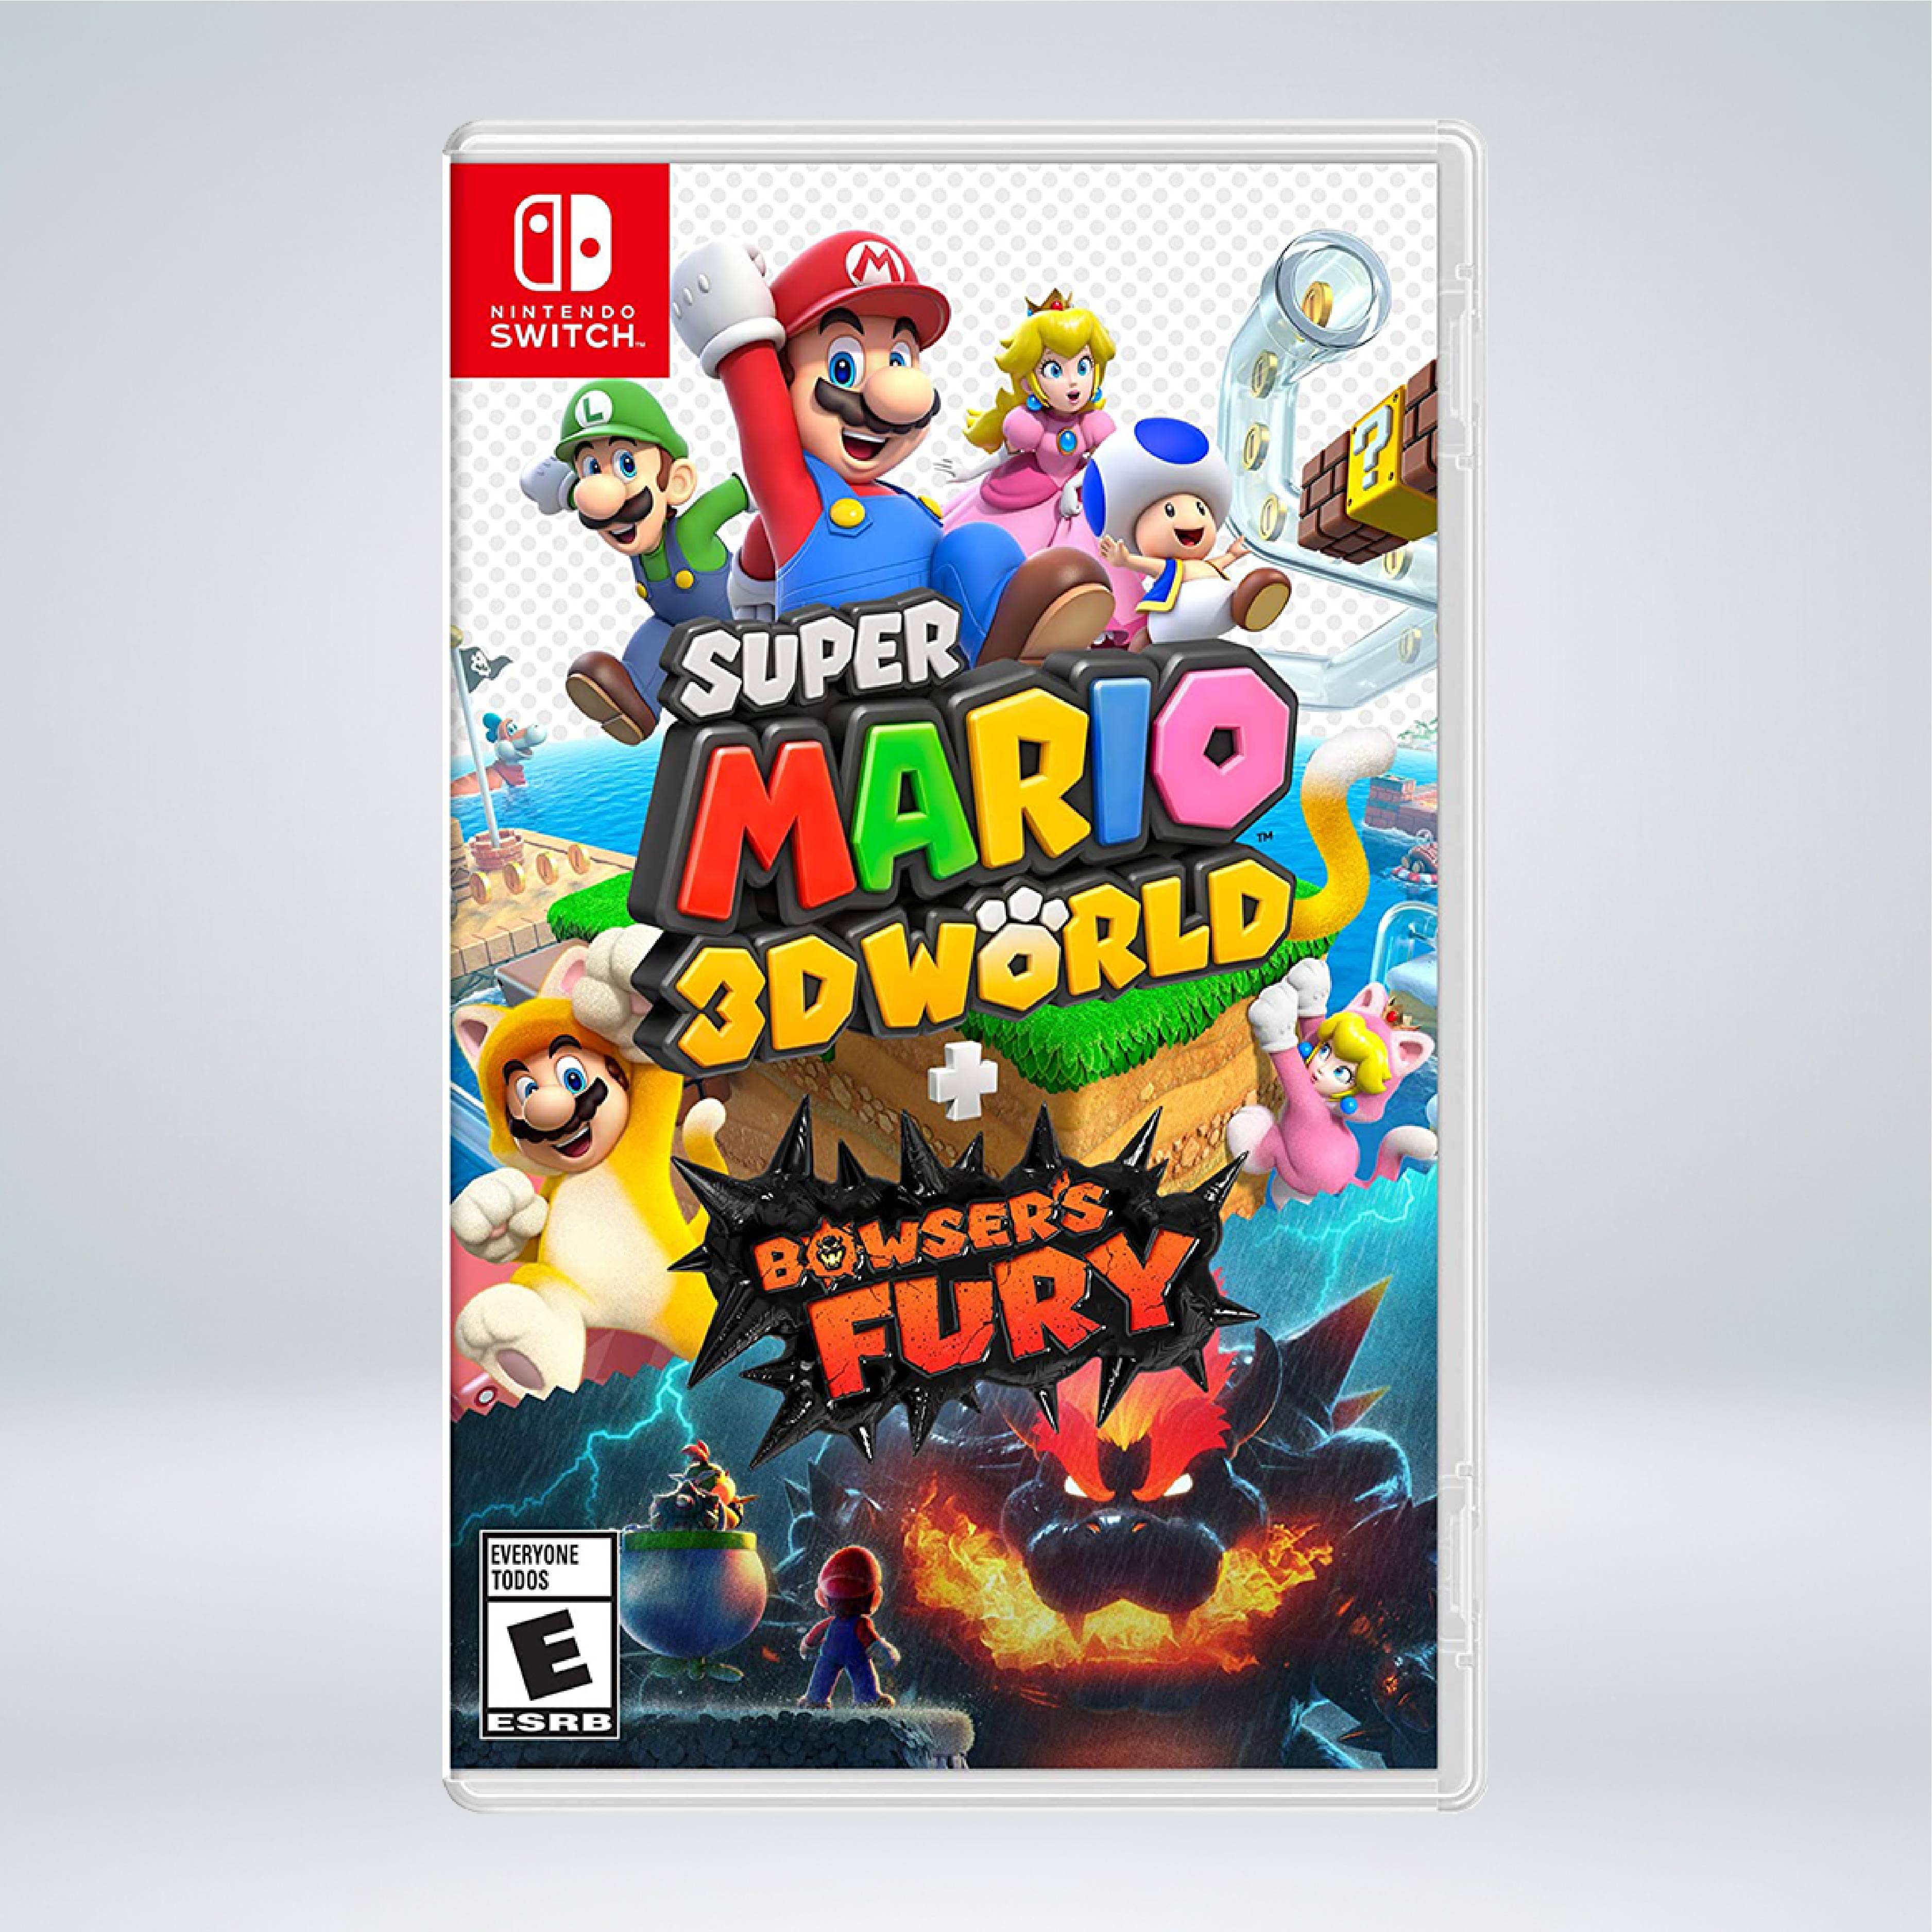 Super Mario 3D World + Bowser s Fury. Nintendo Switch